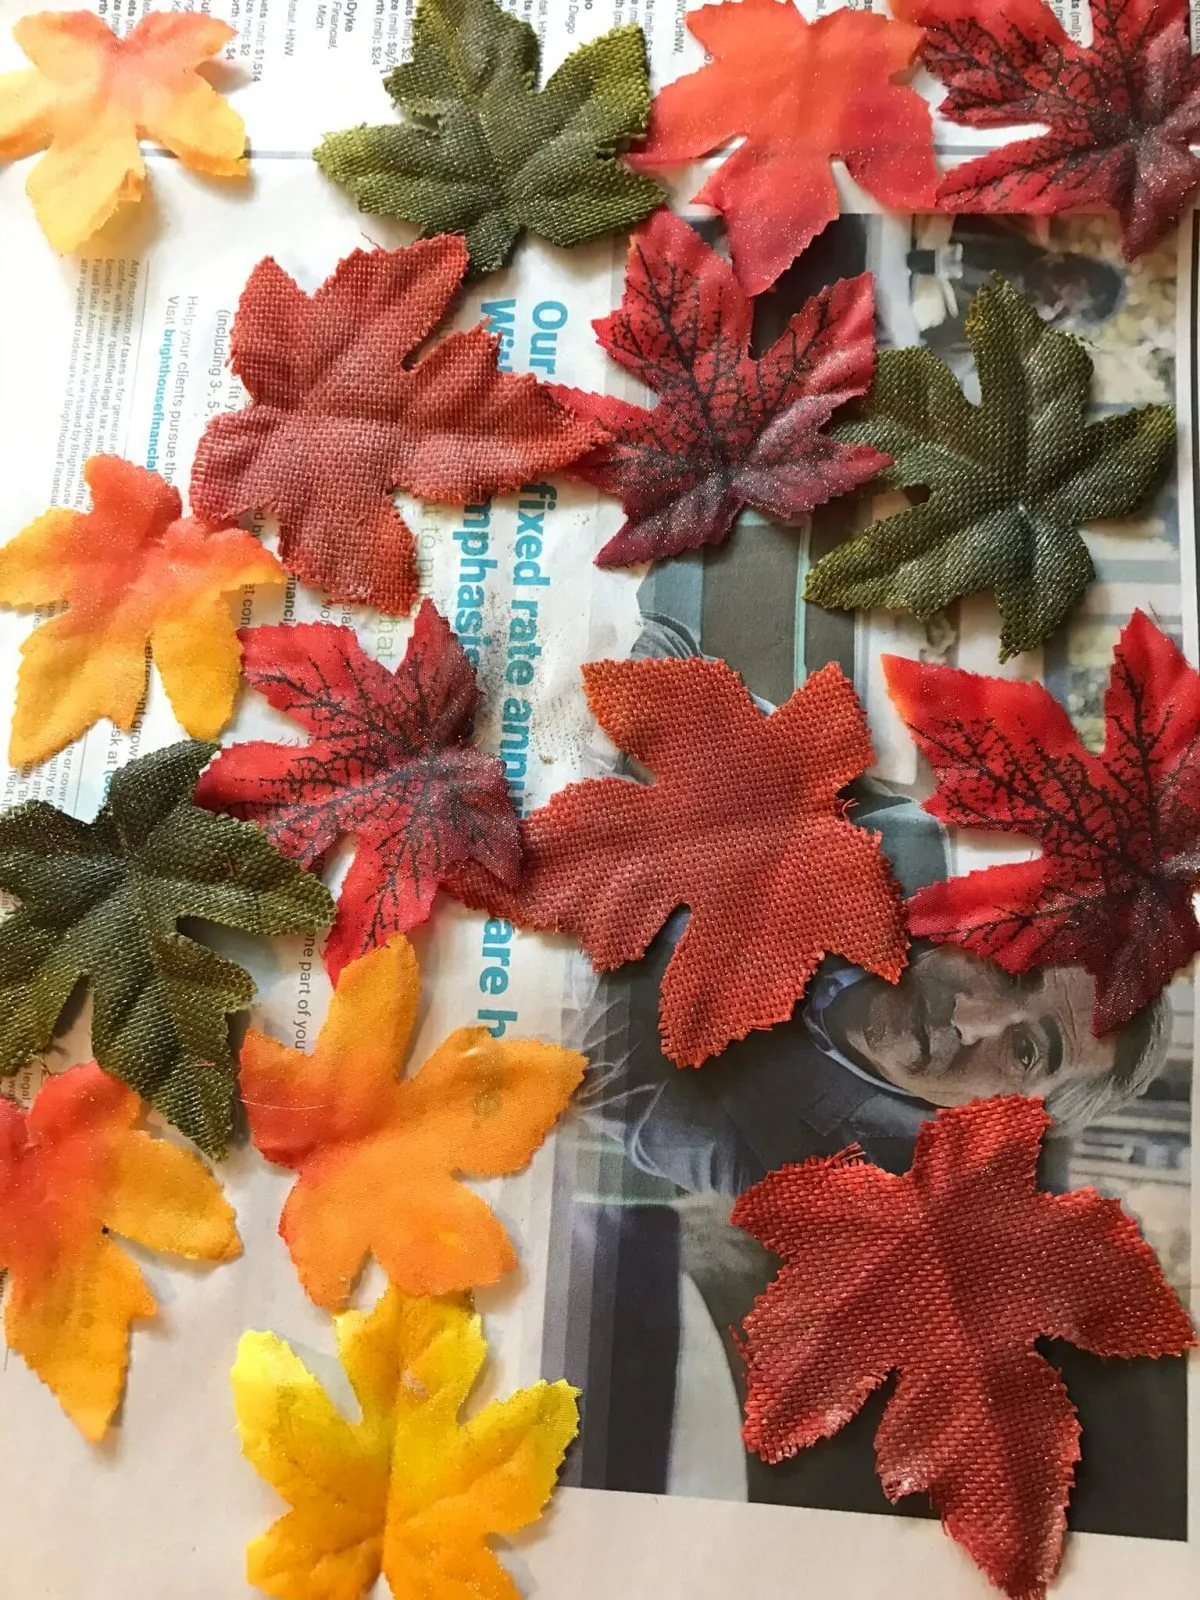 fake leaves spread across newspaper